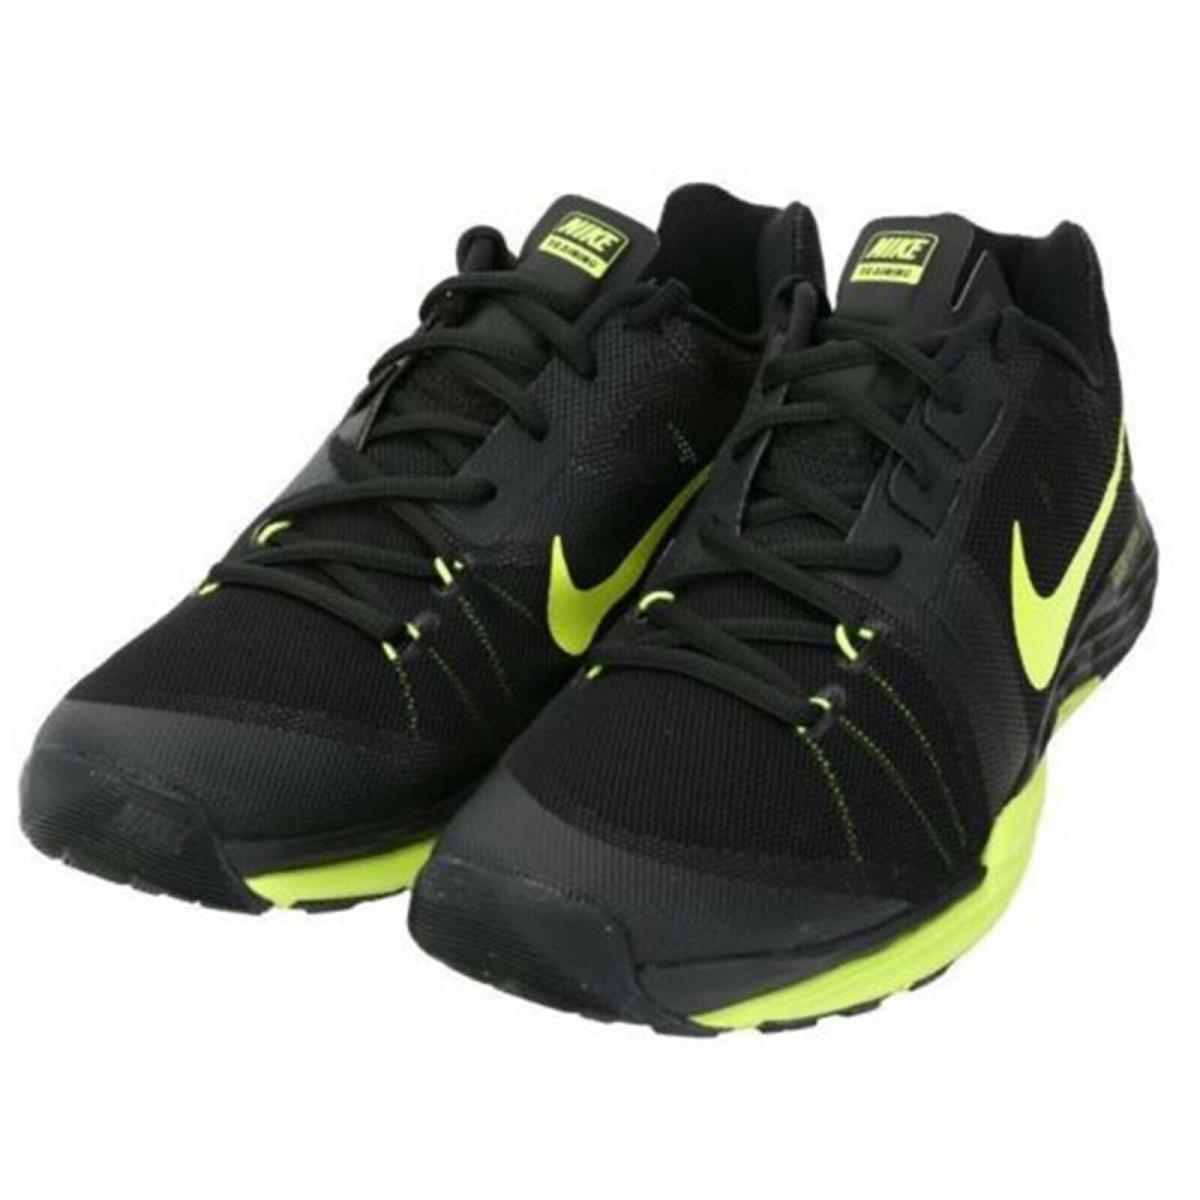 Nike Train Prime Iron DF 832219 - 008 Men`s Training Shoes.new